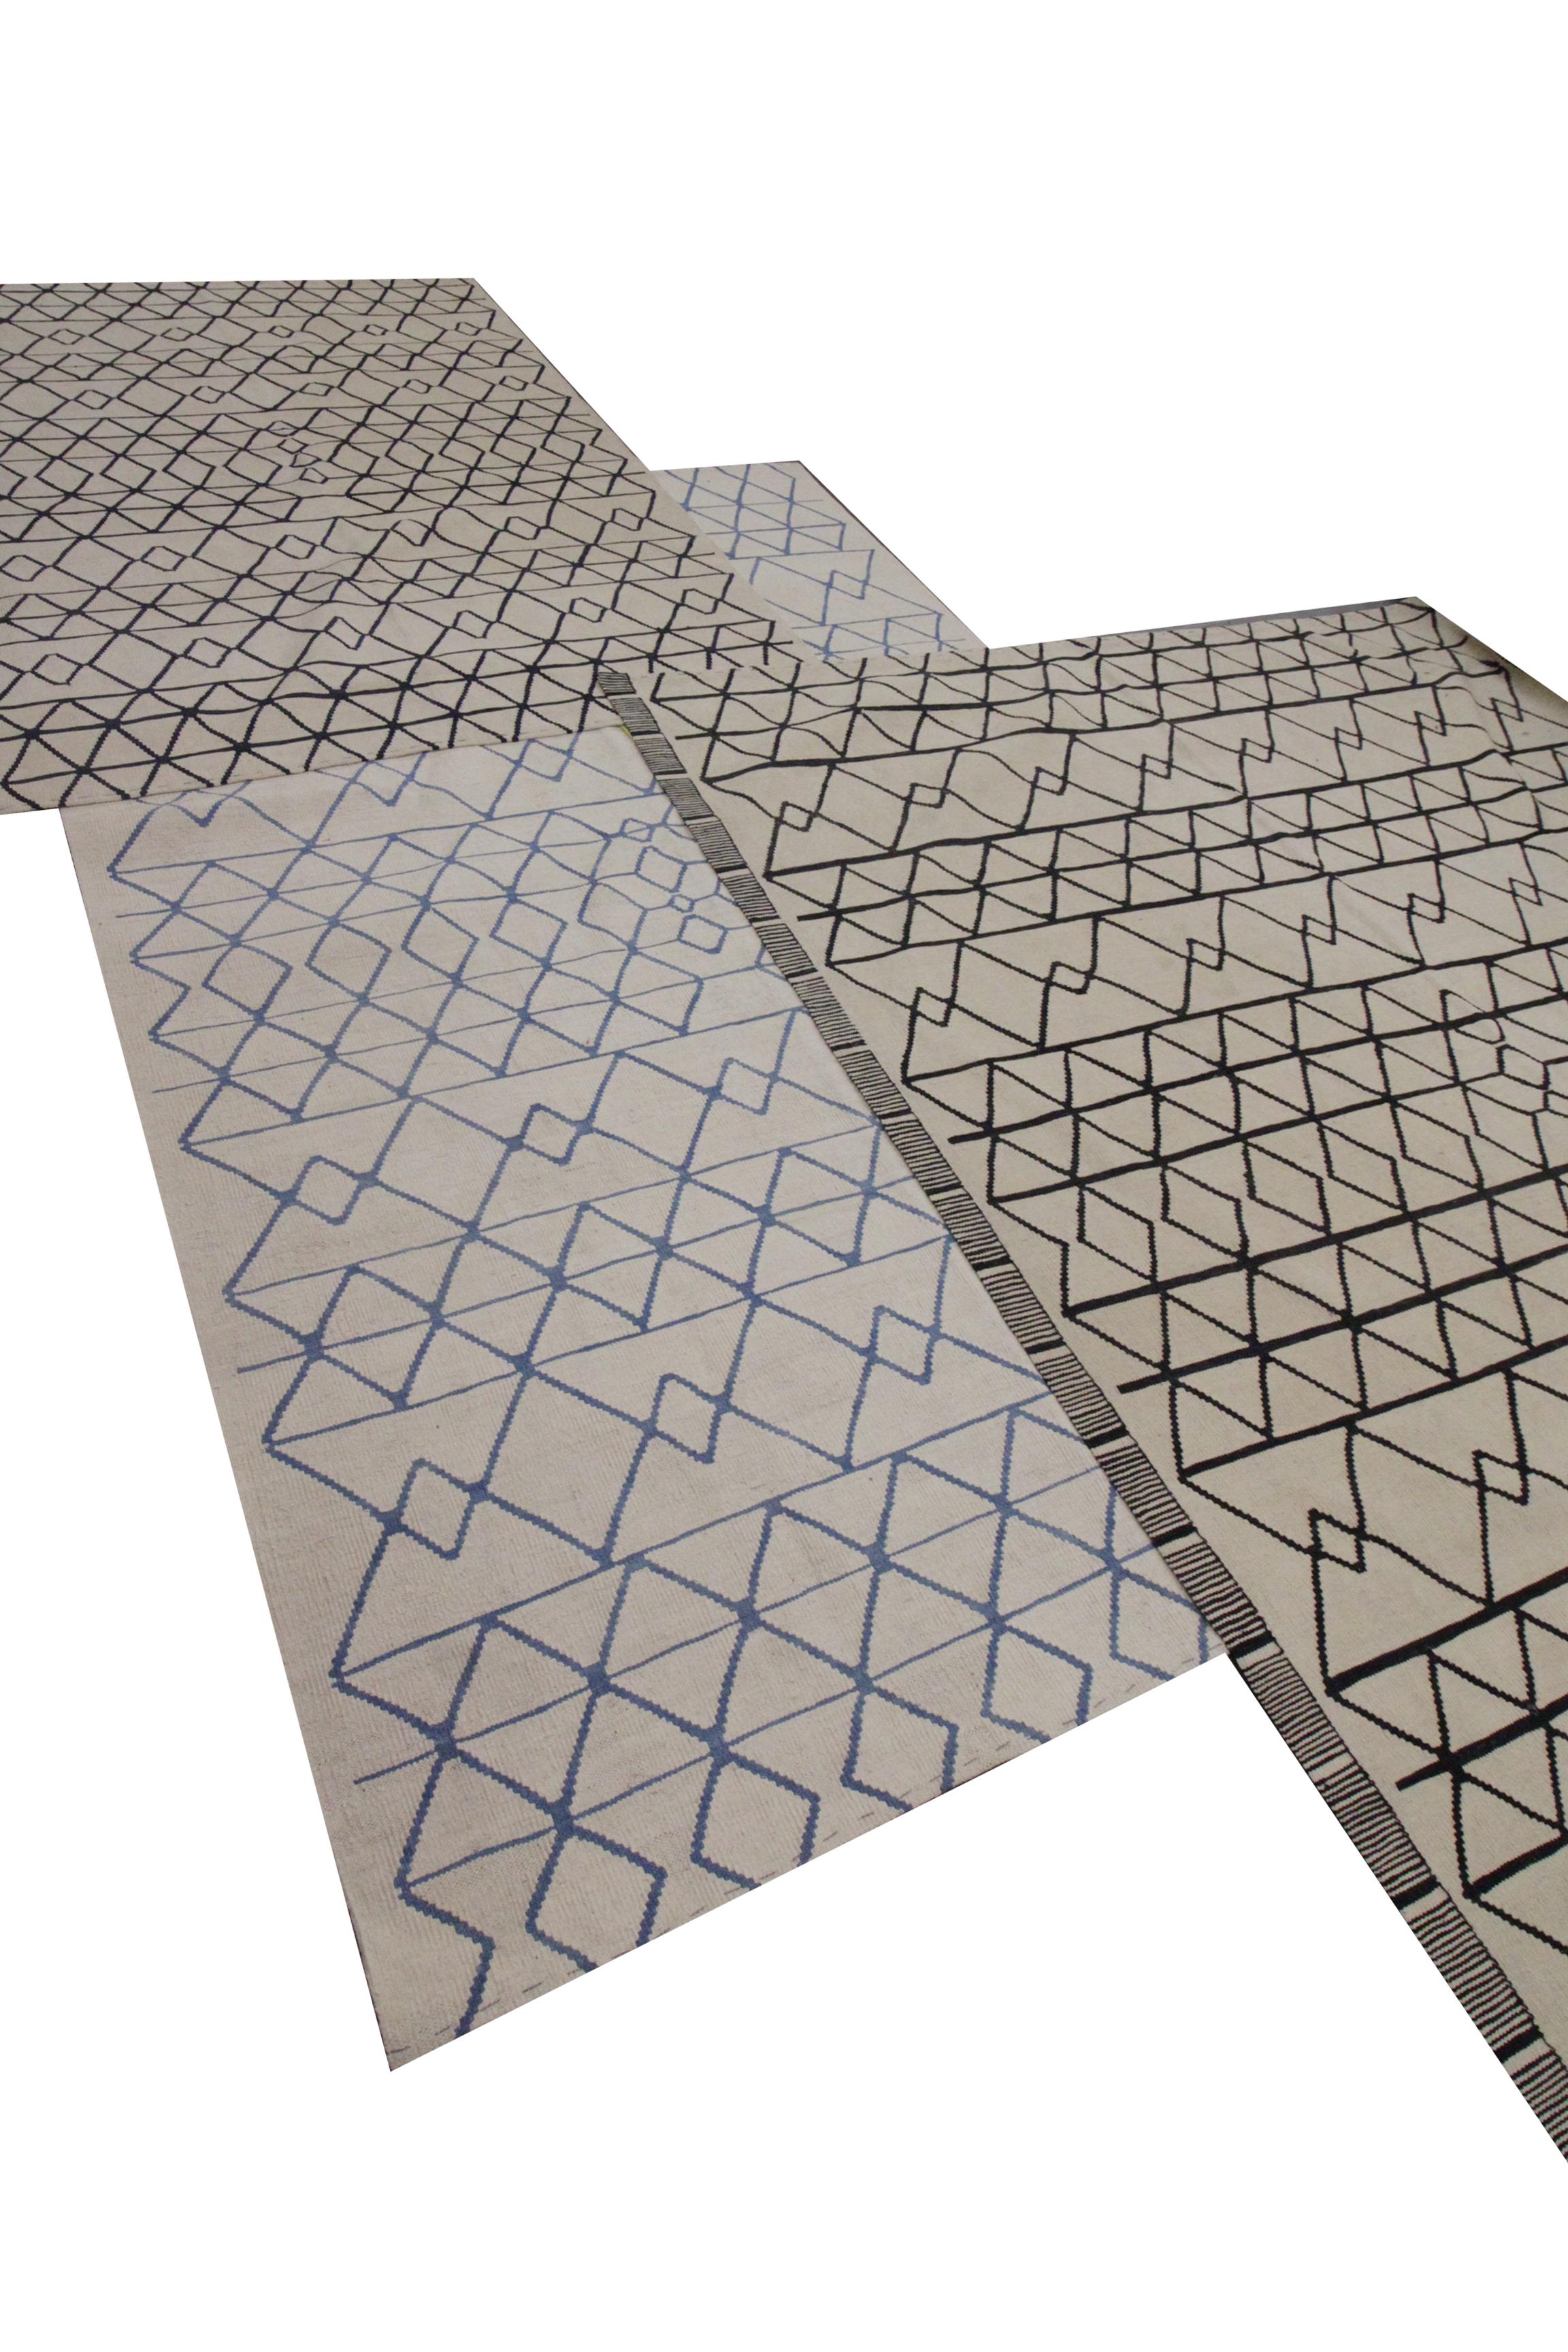 Contemporary Modern Kilim Rug Cream Black Geometric Kilim Abstract Wool Area Rugs